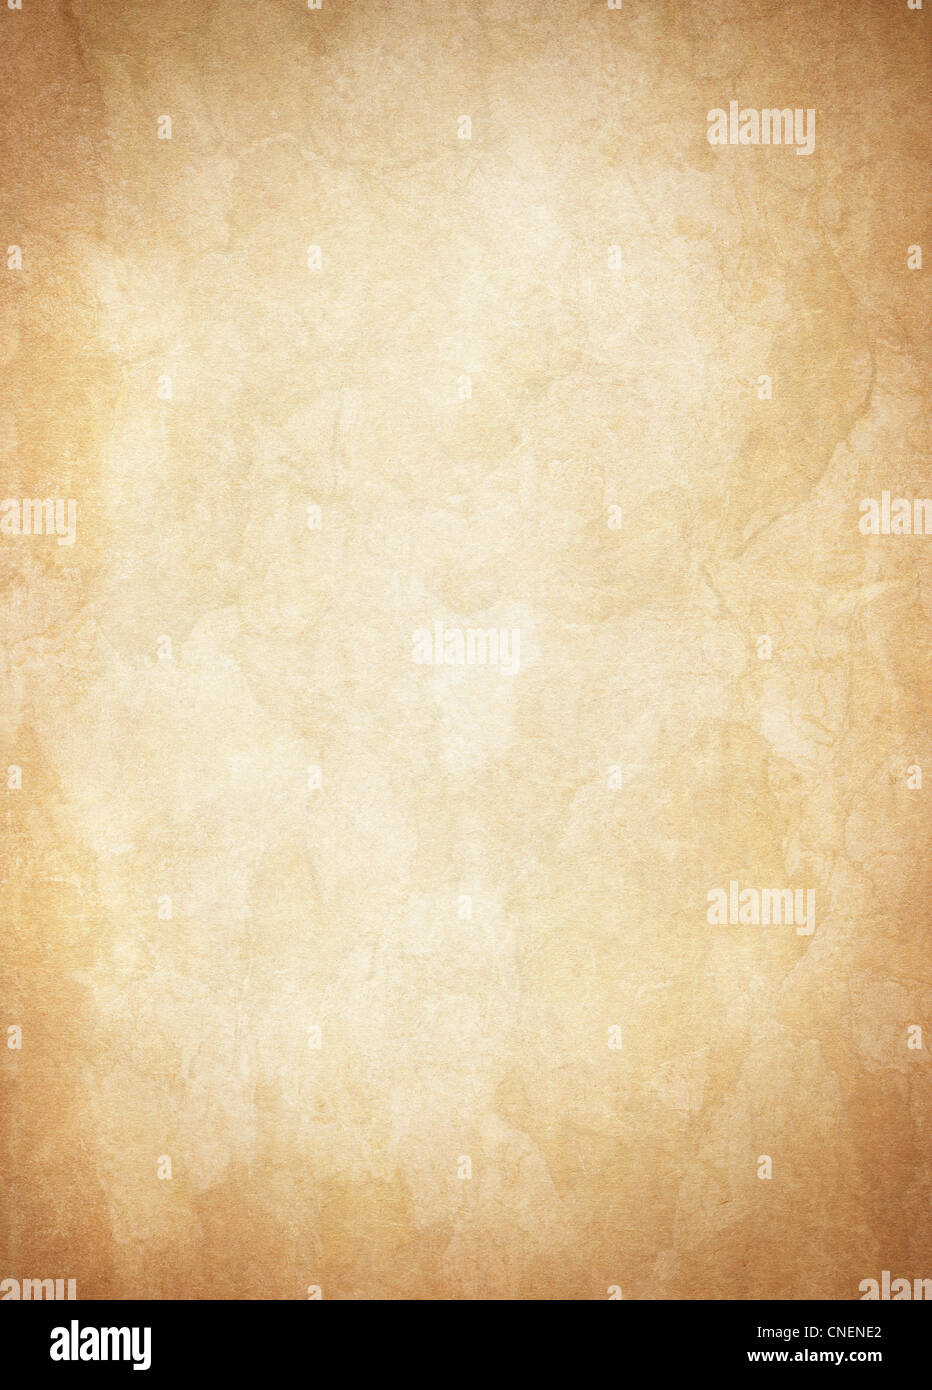 Grunge paper texture background Stock Photo